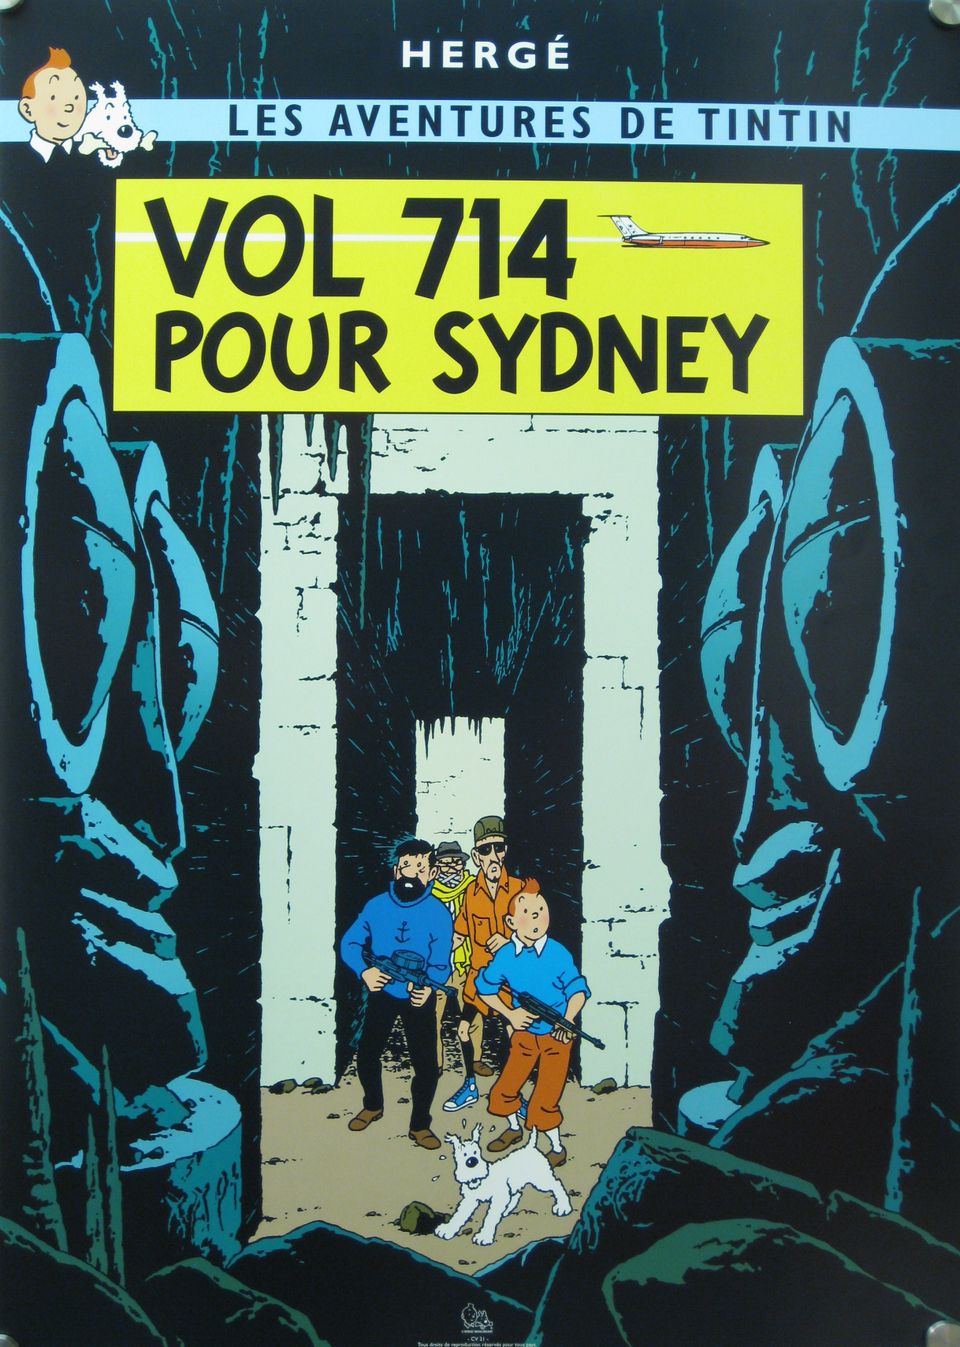 Juliste, yms. 146 – Herge – Tintti, Tintin Vol 714 Pour Sydney